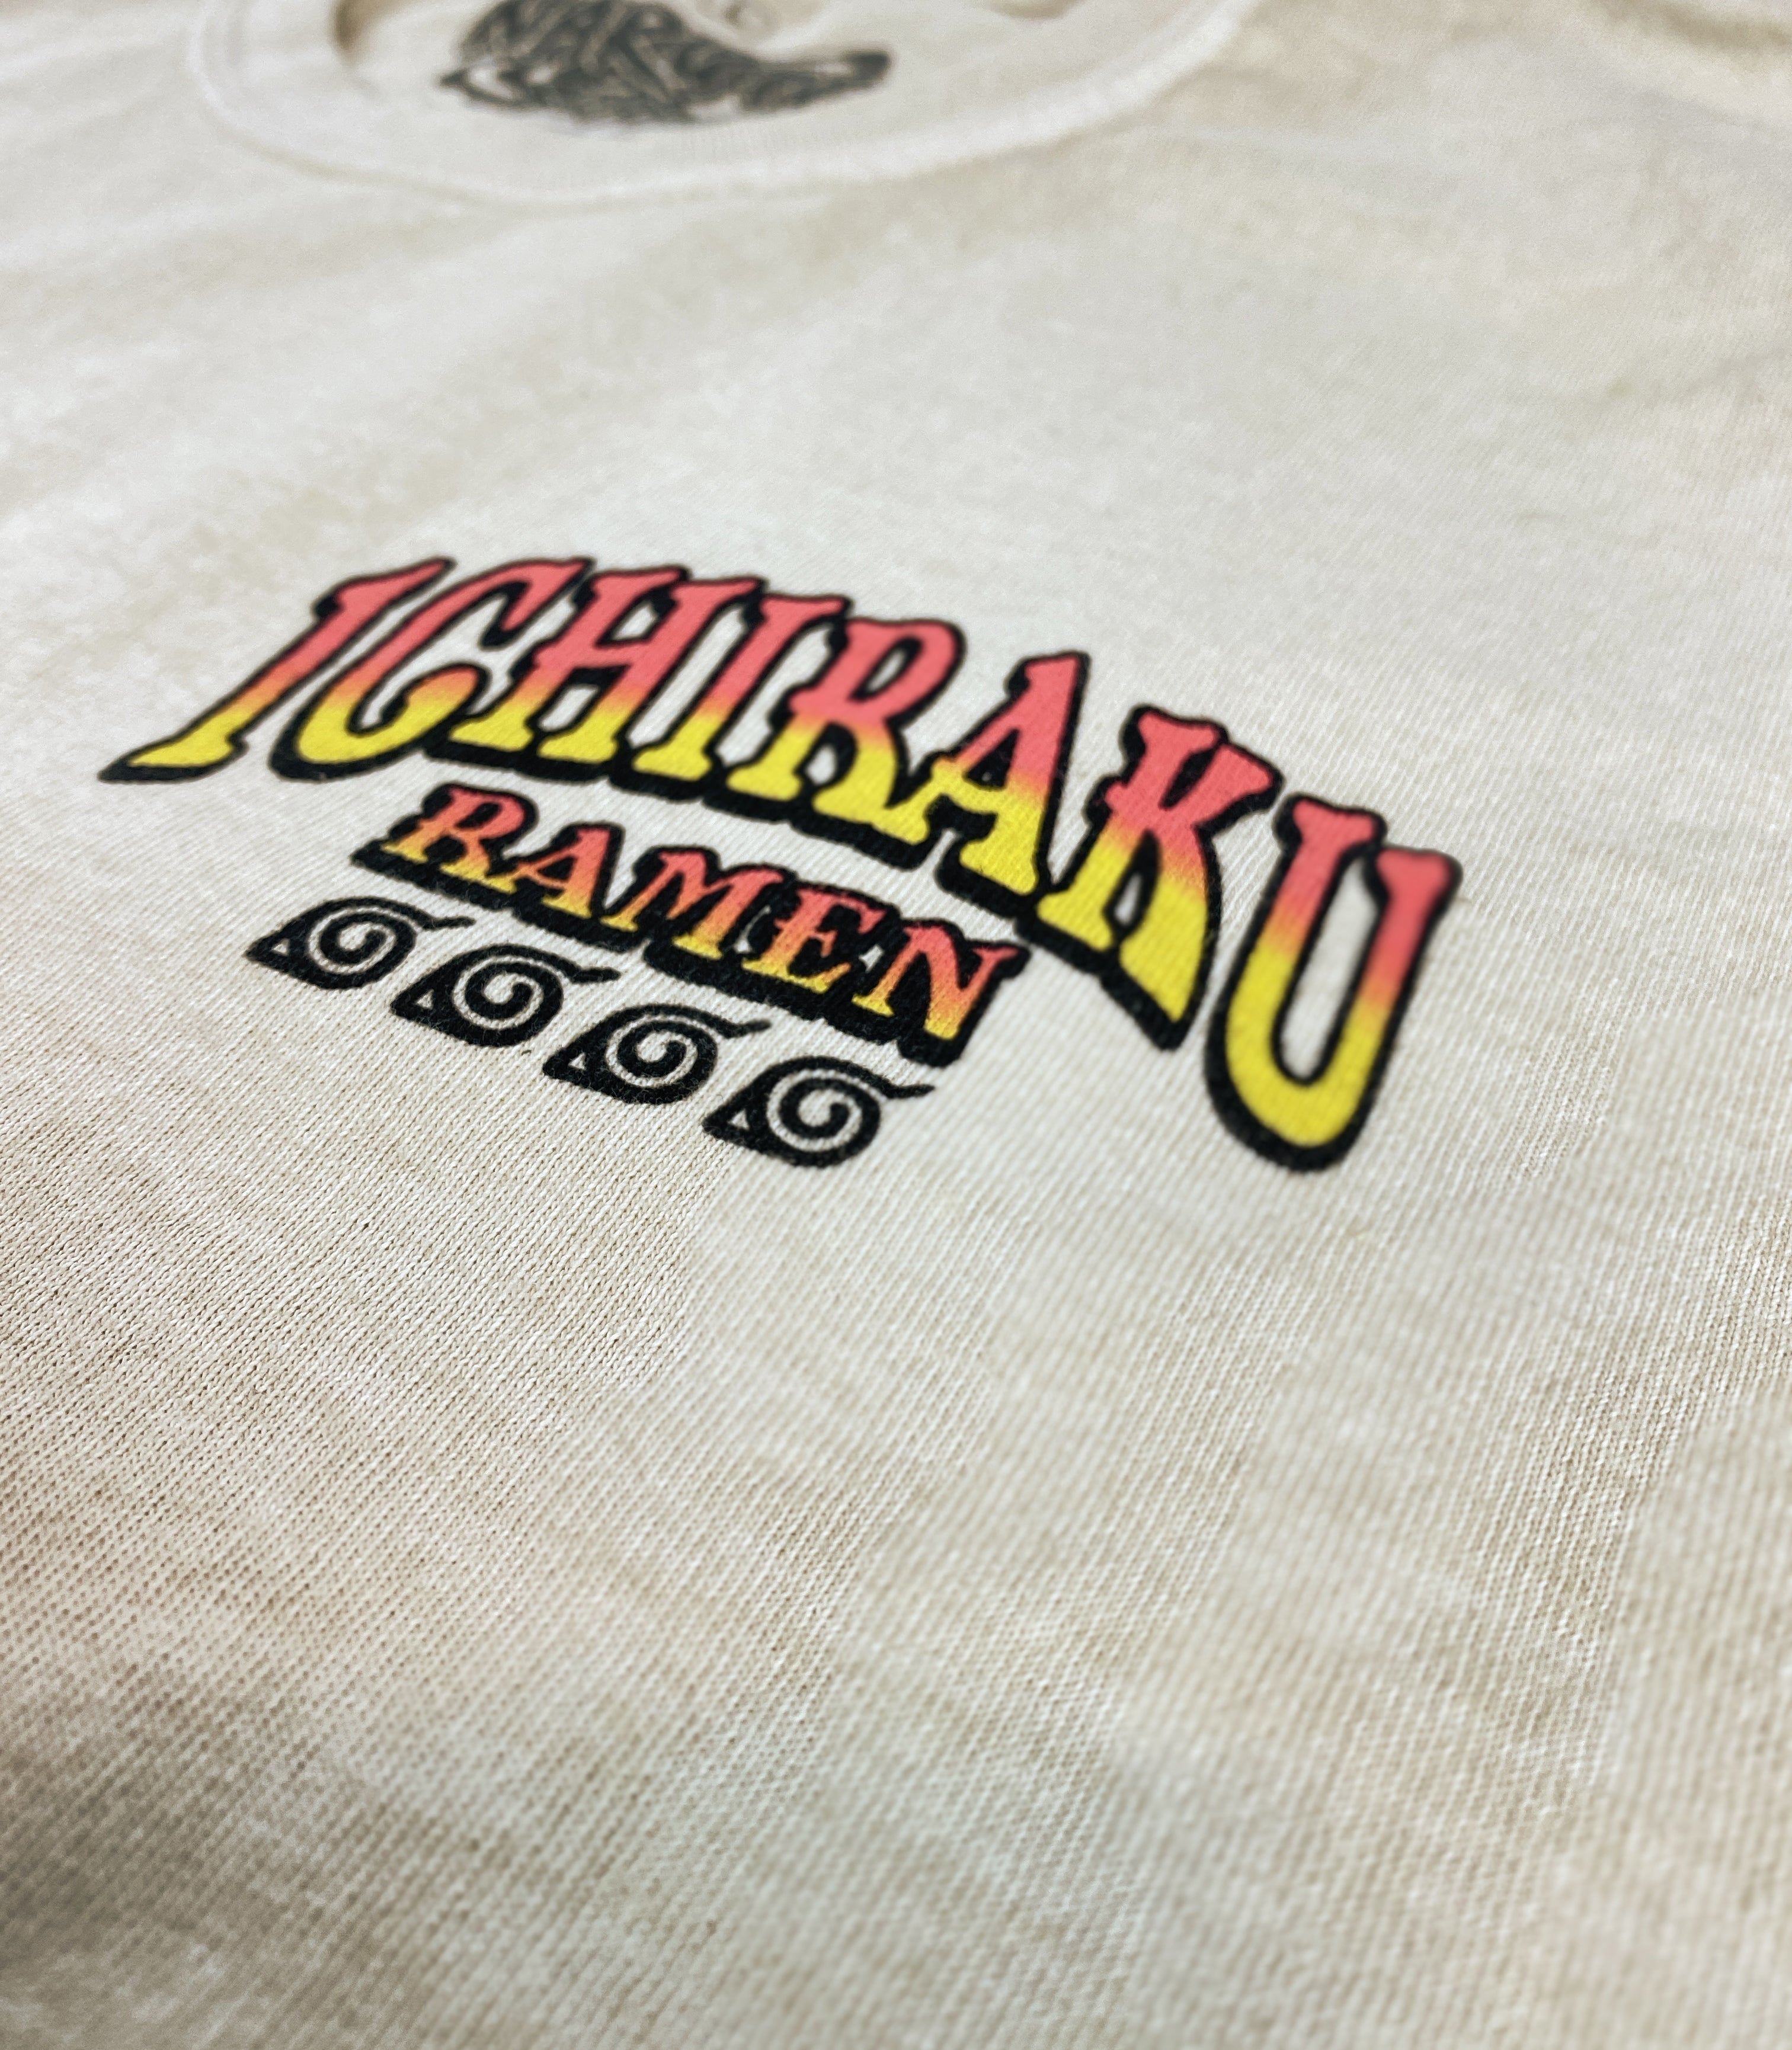 Naruto Shippuden - Ichiraku Ramen T-Shirt - Crunchyroll Exclusive! image count 2